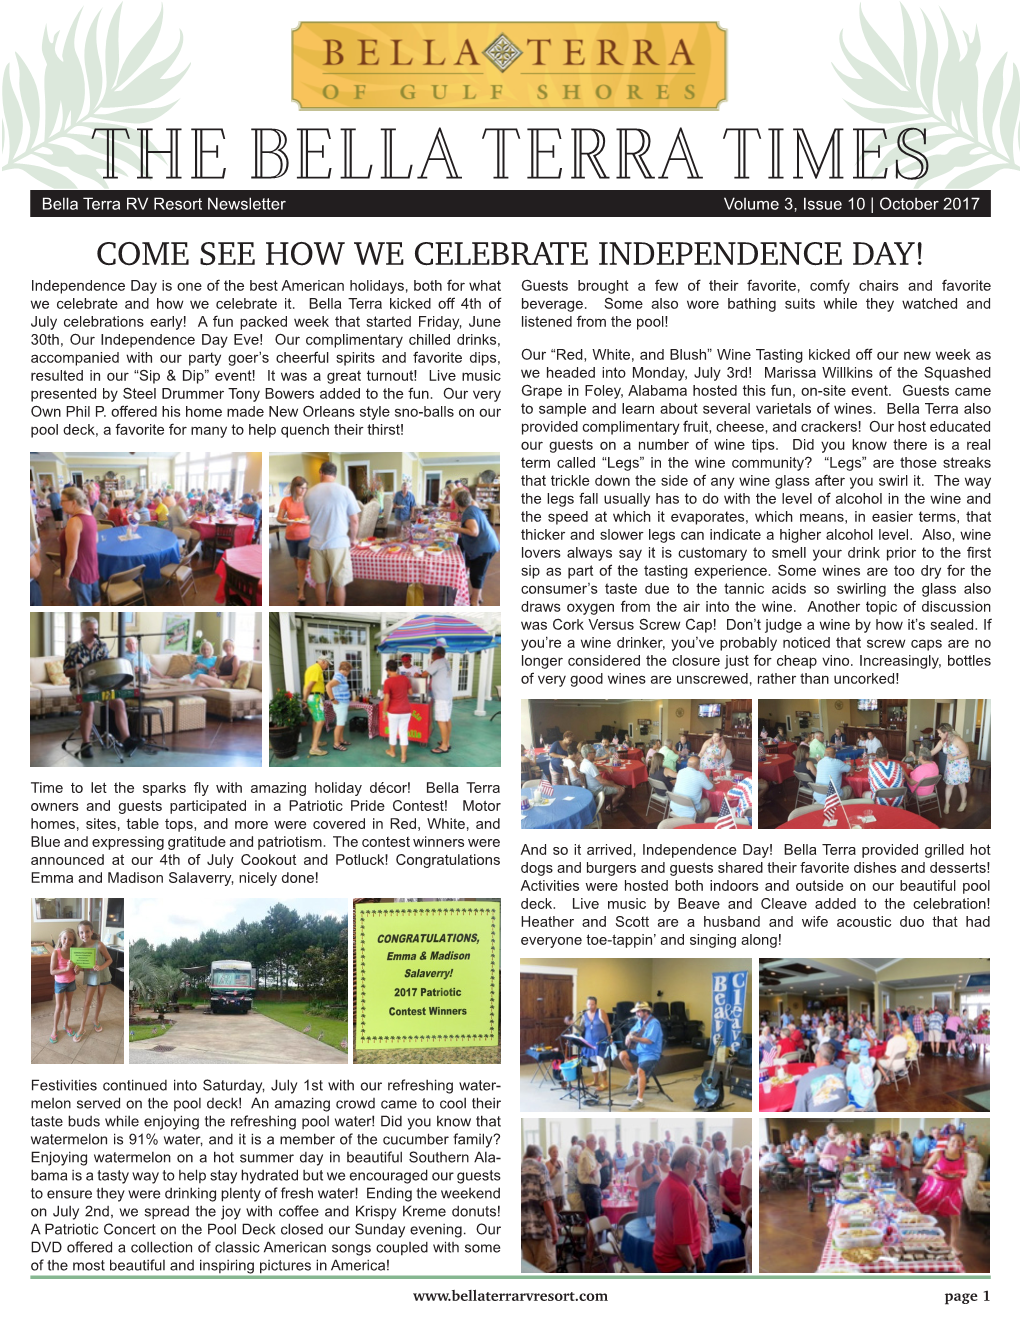 The Bella Terra Times